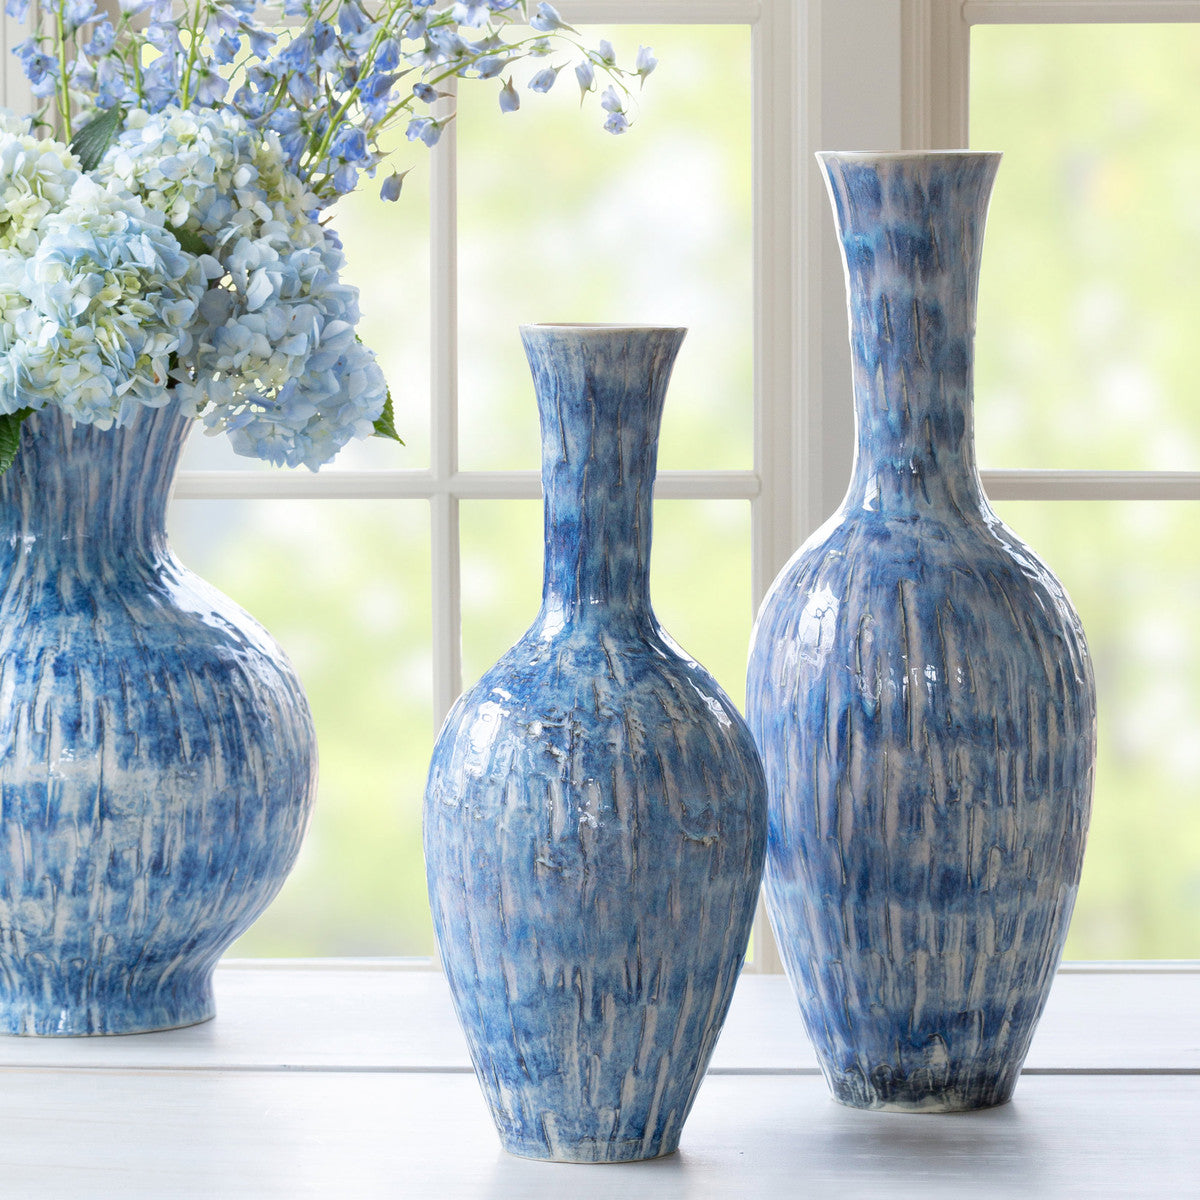 Lovecup Vibrant Blue Porcelain Vase, Medium L735